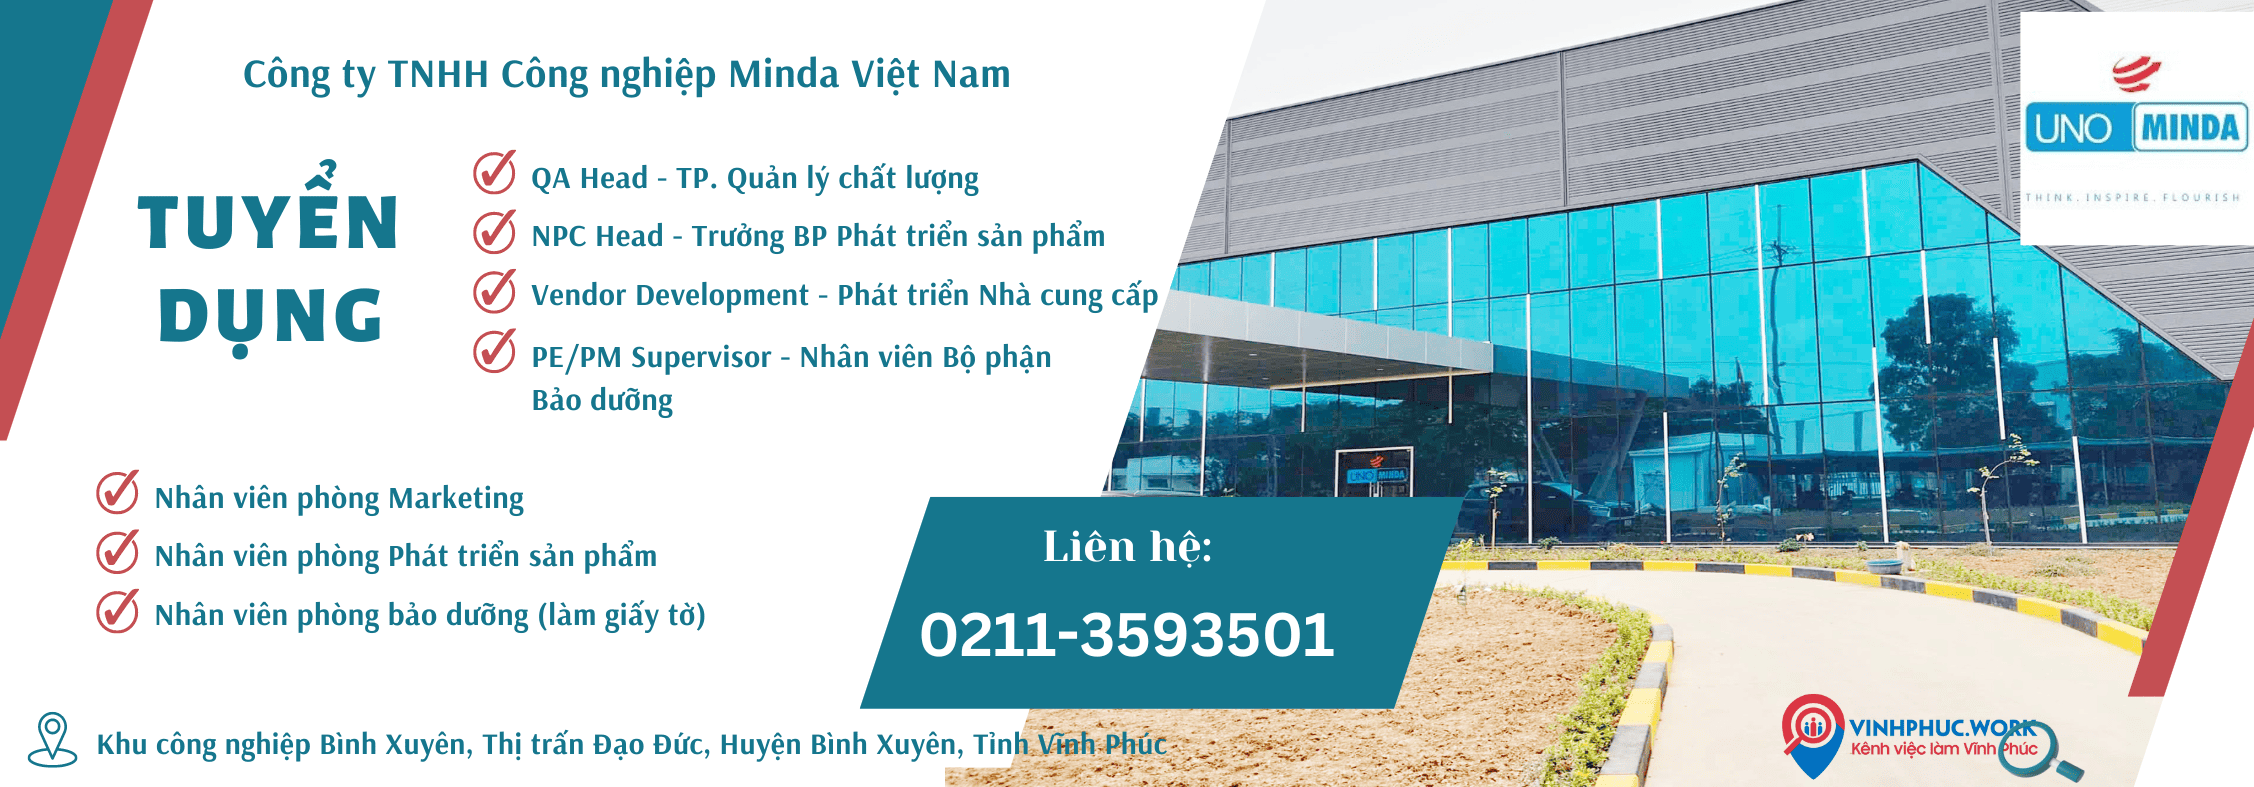 Cong Ty Tnhh Cong Nghiep Minda Viet Nam Thong Bao Tuyen Dung 06 Vi Tri Tot 1